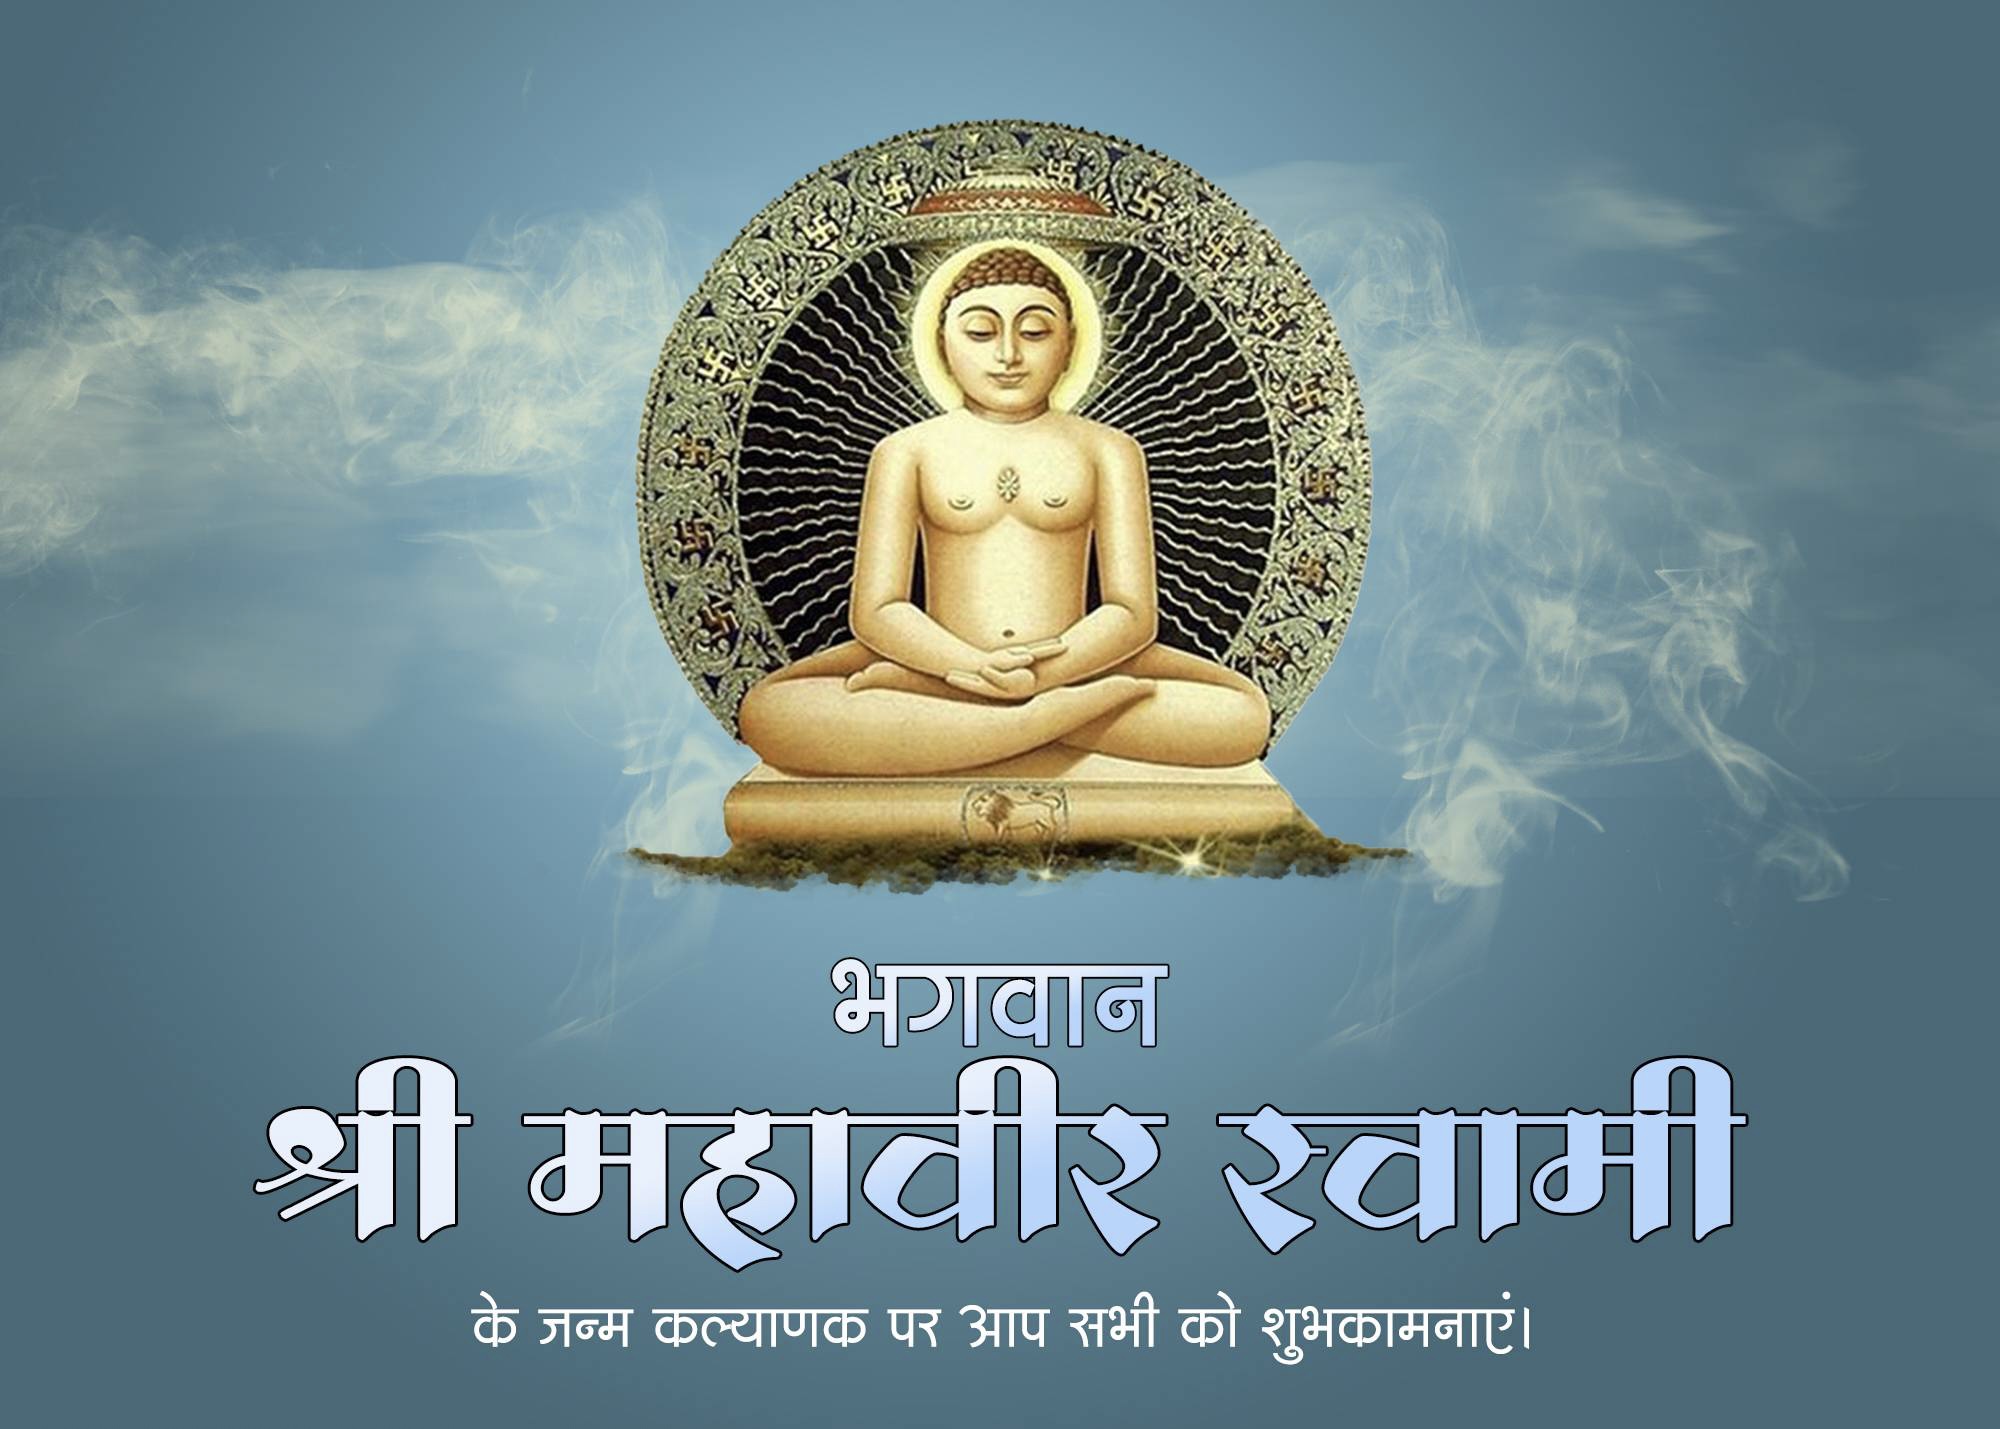 Celebrating Mahaveer Janma Kalyanak: Jain Wisdom for a Healthier World